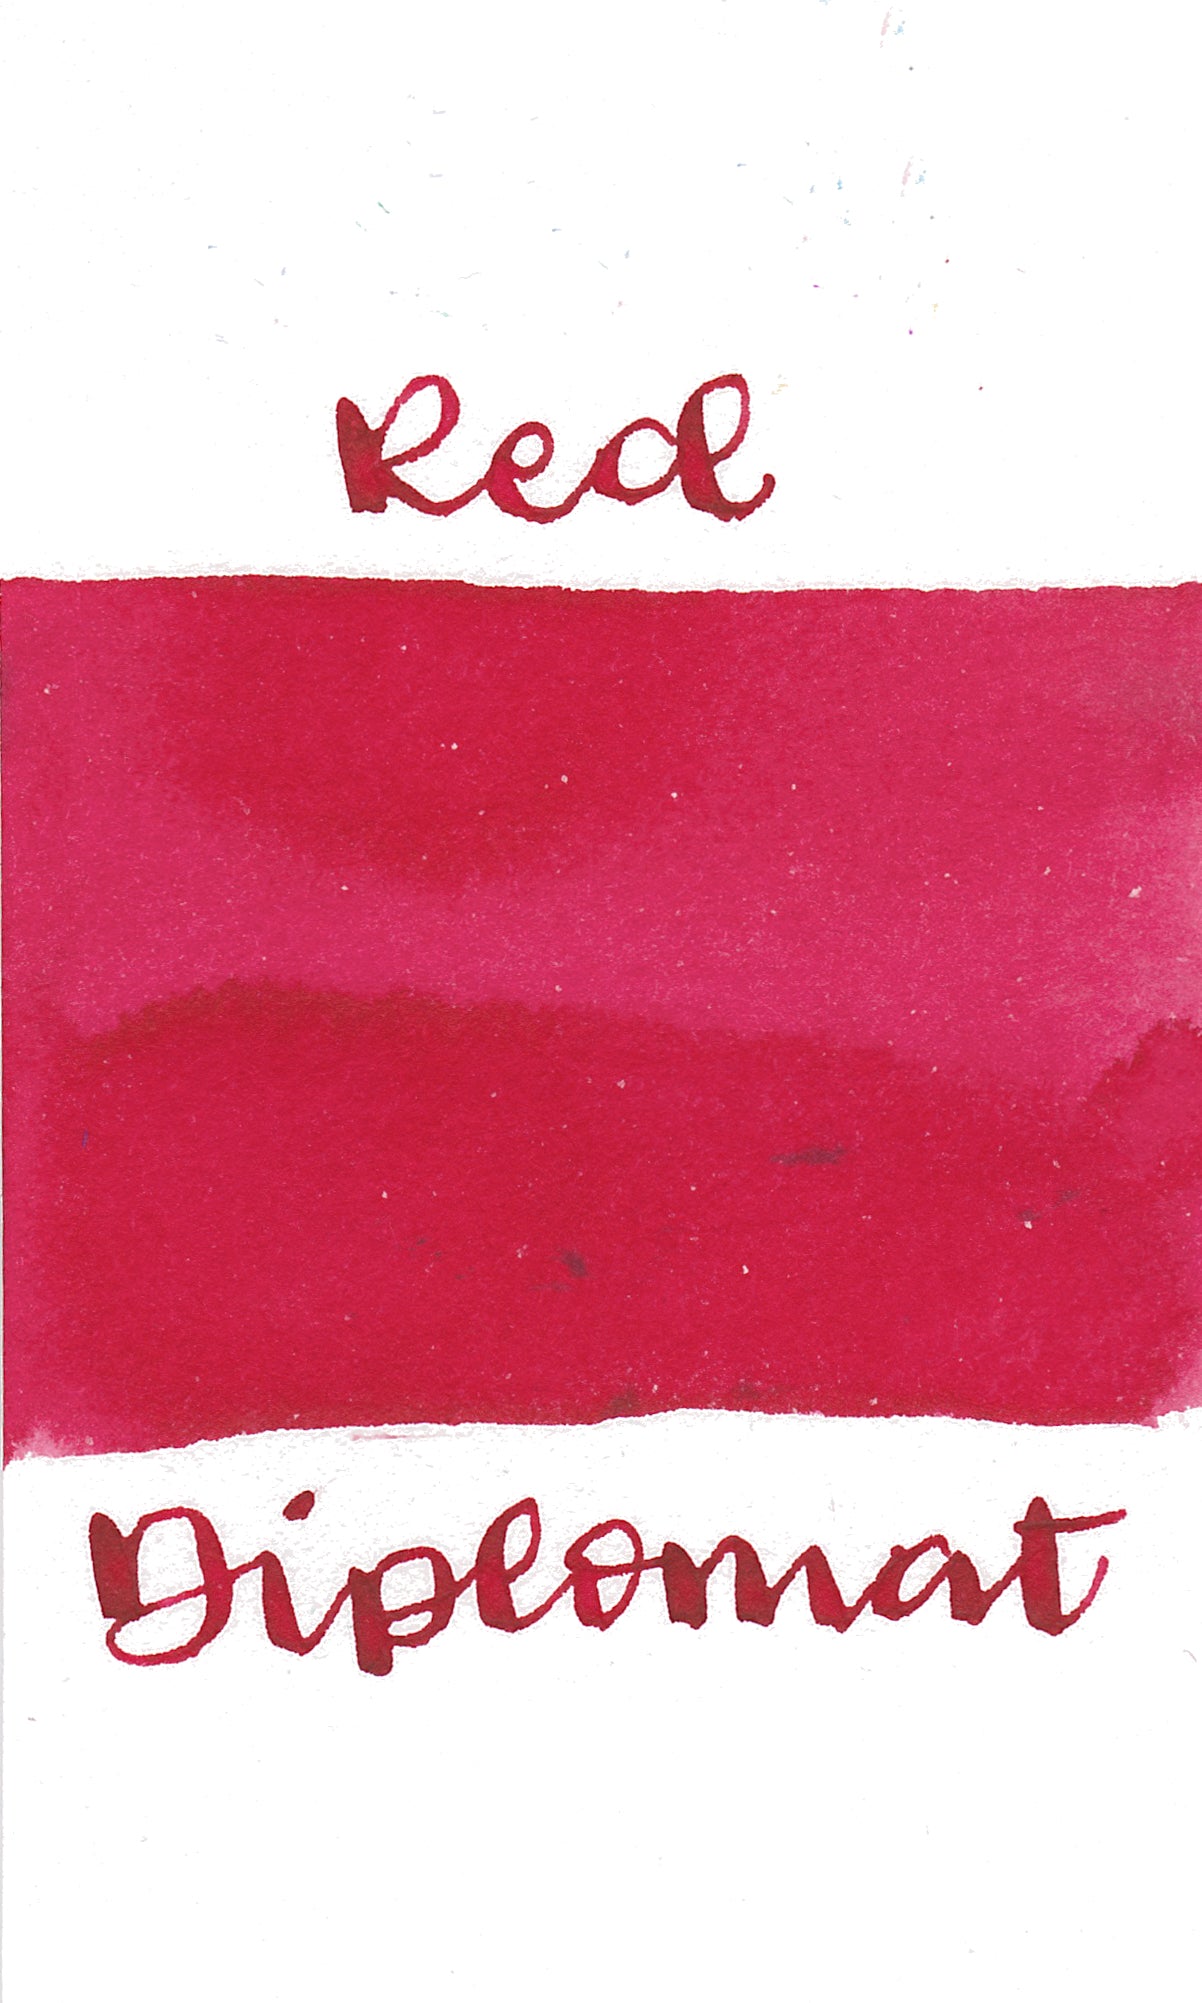 Diplomat Red Ink